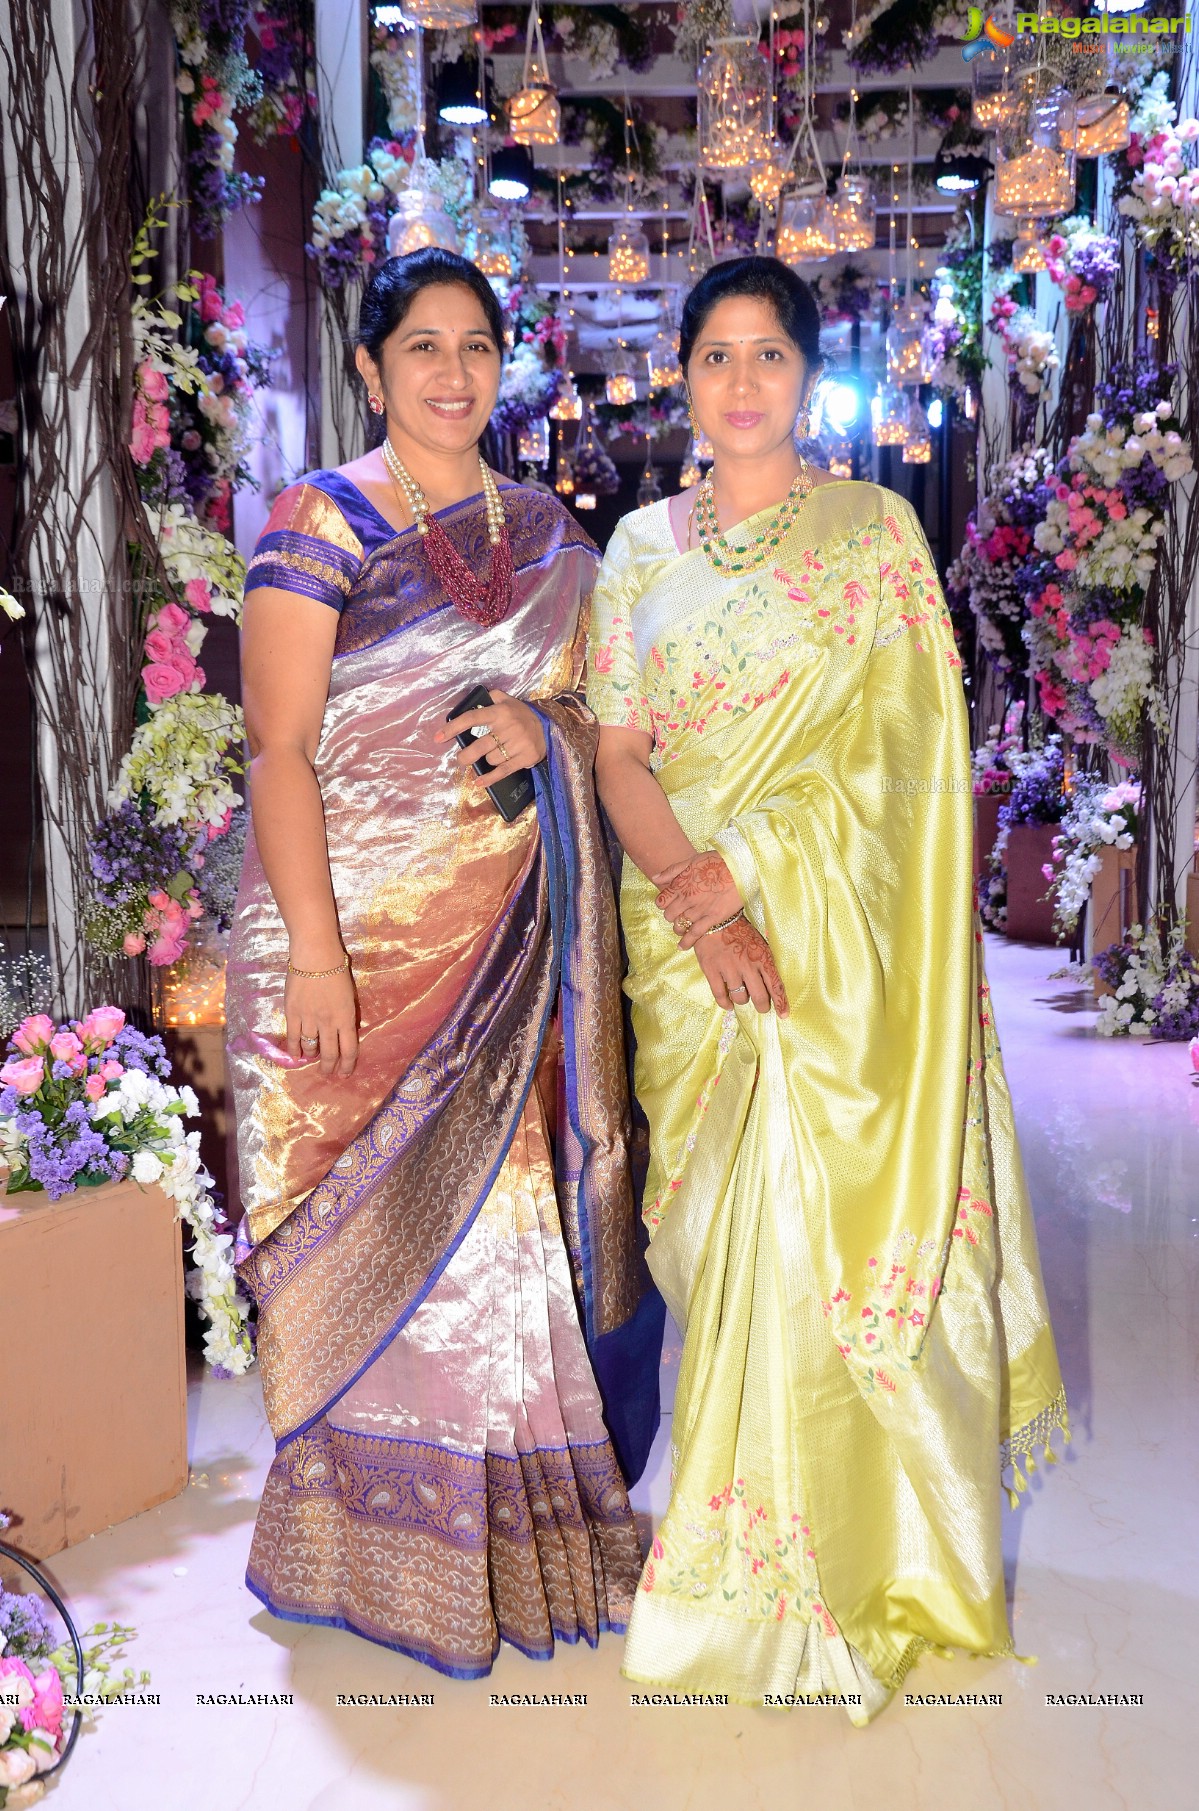 Grand Engagement Ceremony of Karthik with Depthi Sai at Trident, Hyderabad